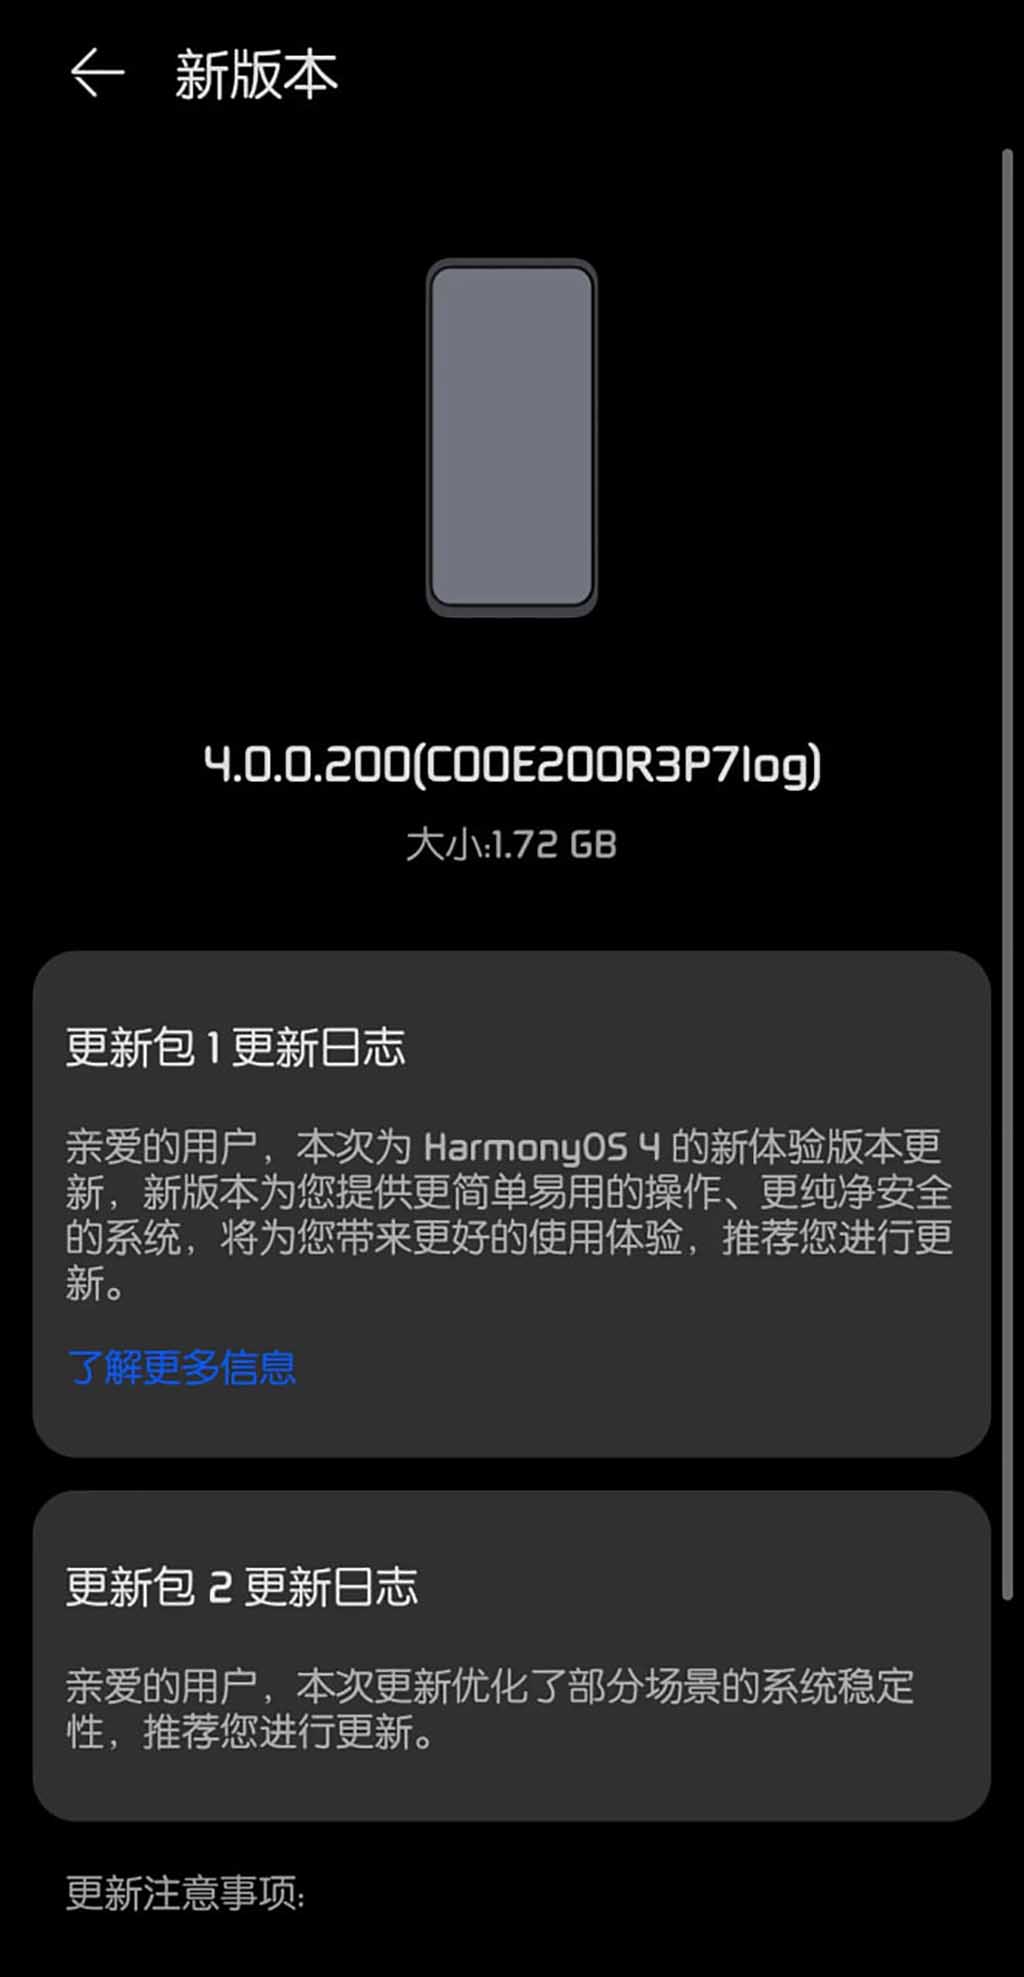 Возможности бета-версии HarmonyOS 4.0.0.200